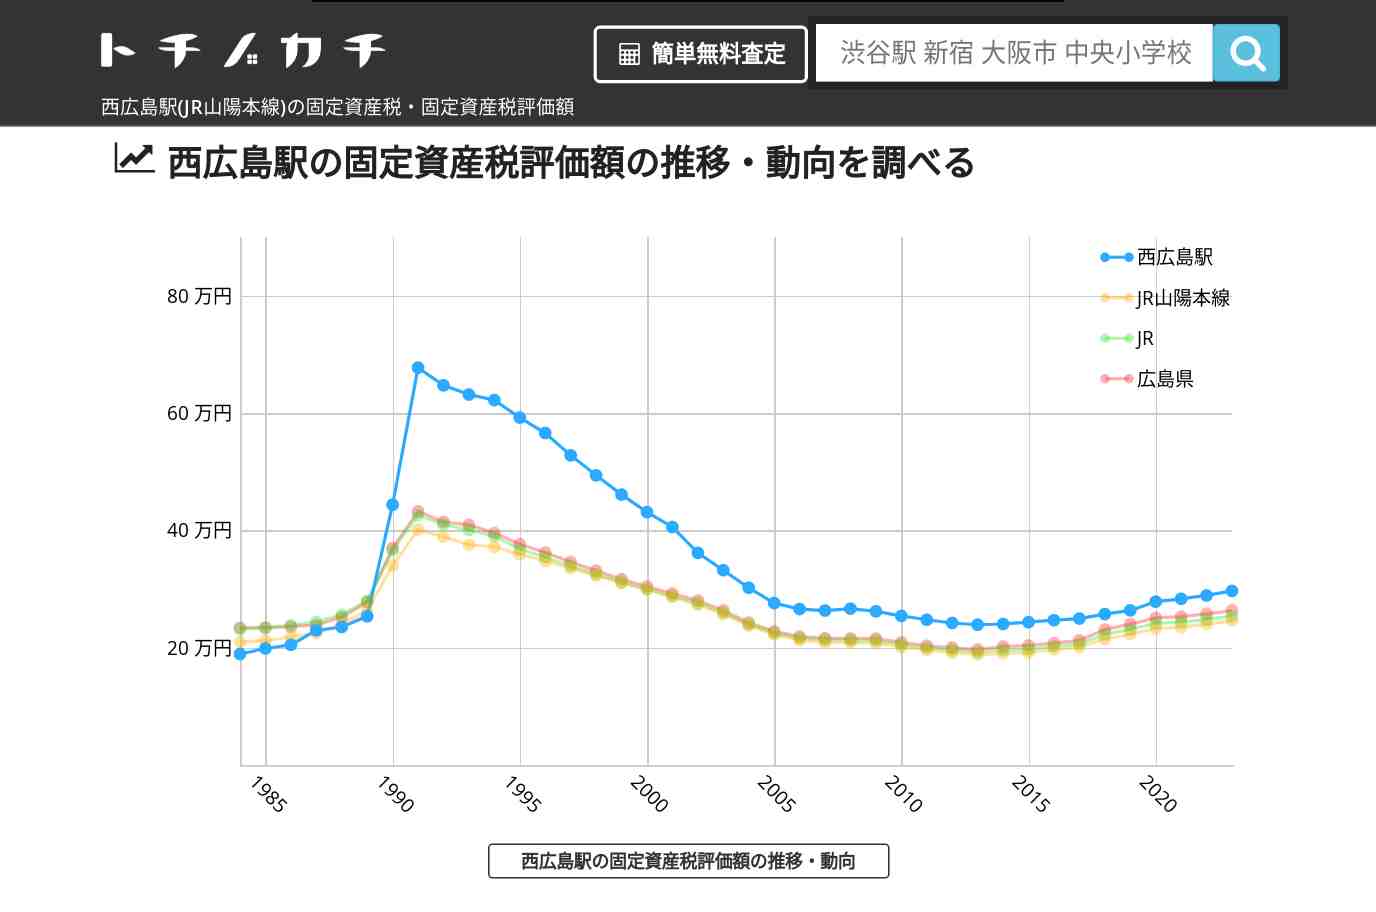 西広島駅(JR山陽本線)の固定資産税・固定資産税評価額 | トチノカチ